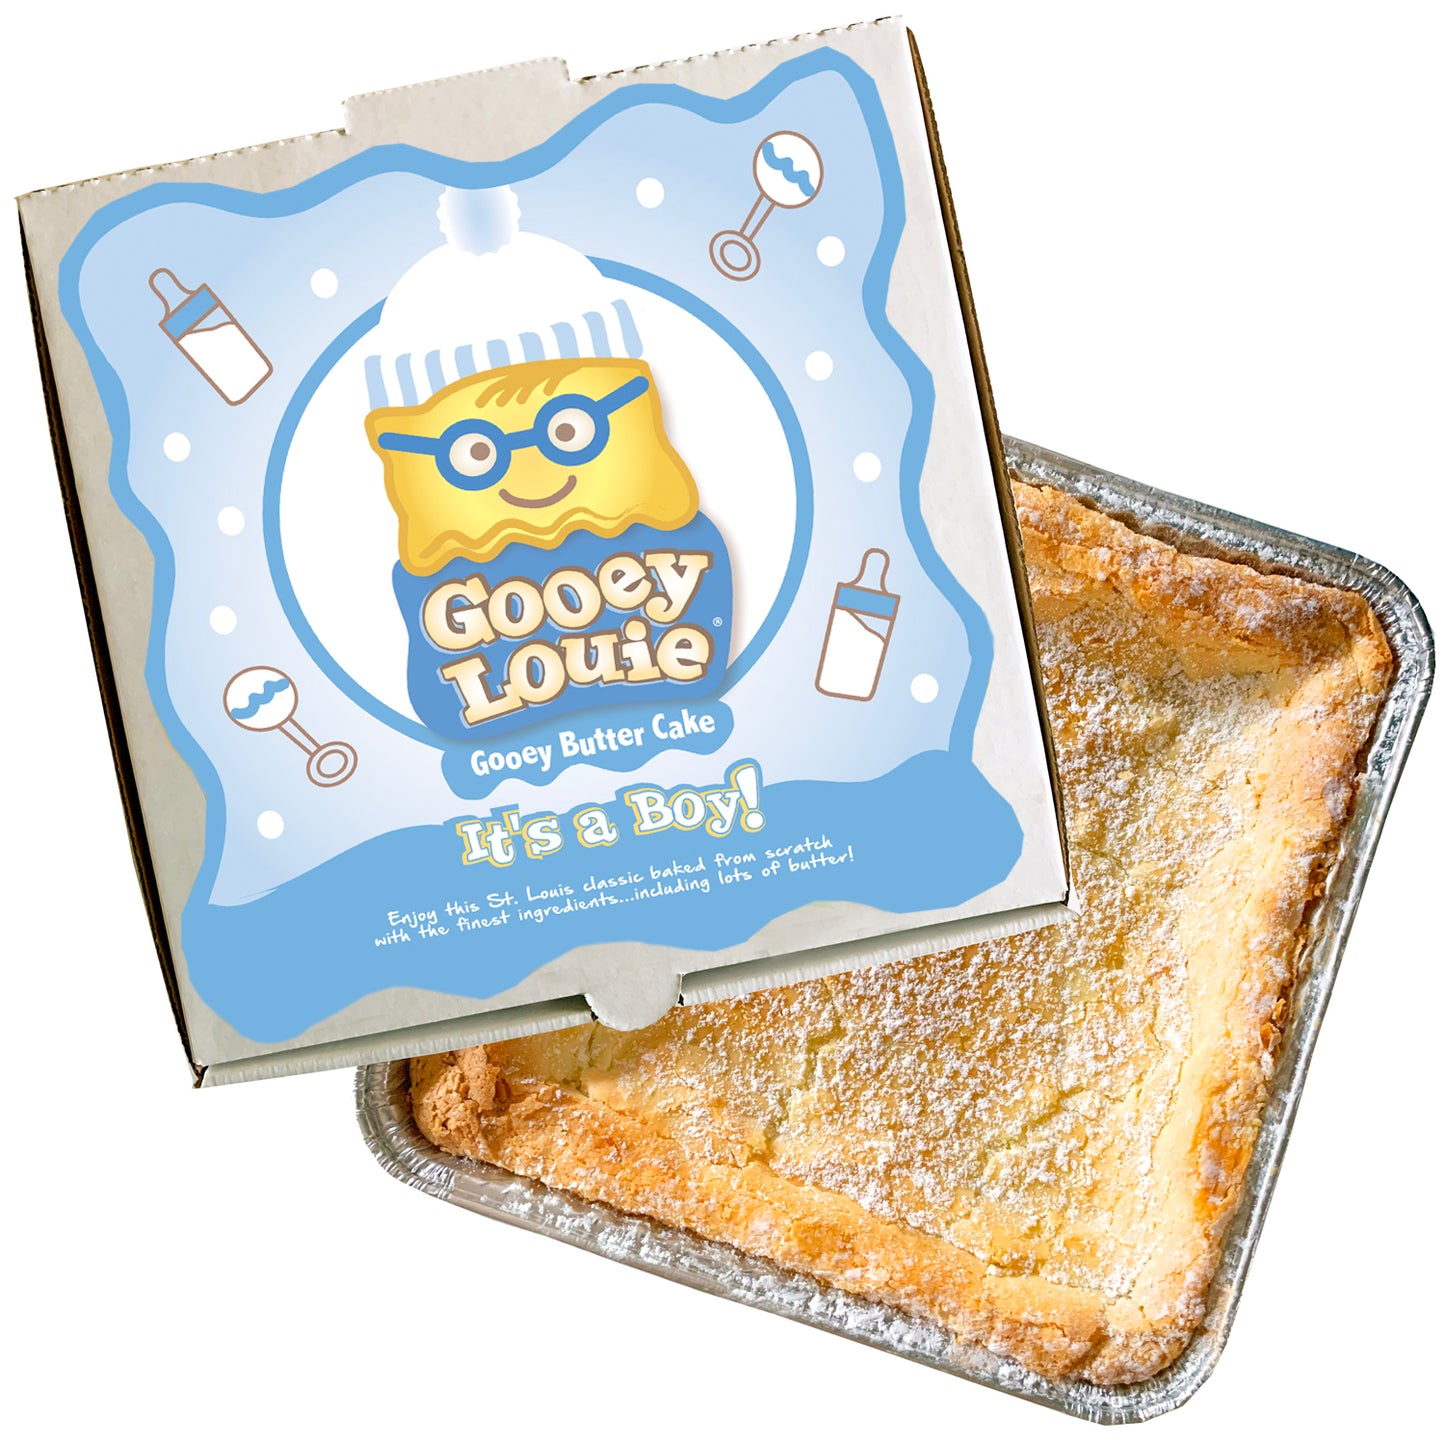 IT'S A BOY! Gooey Louie Box– Gooey Butter Cake SHIPPING INCLUDED